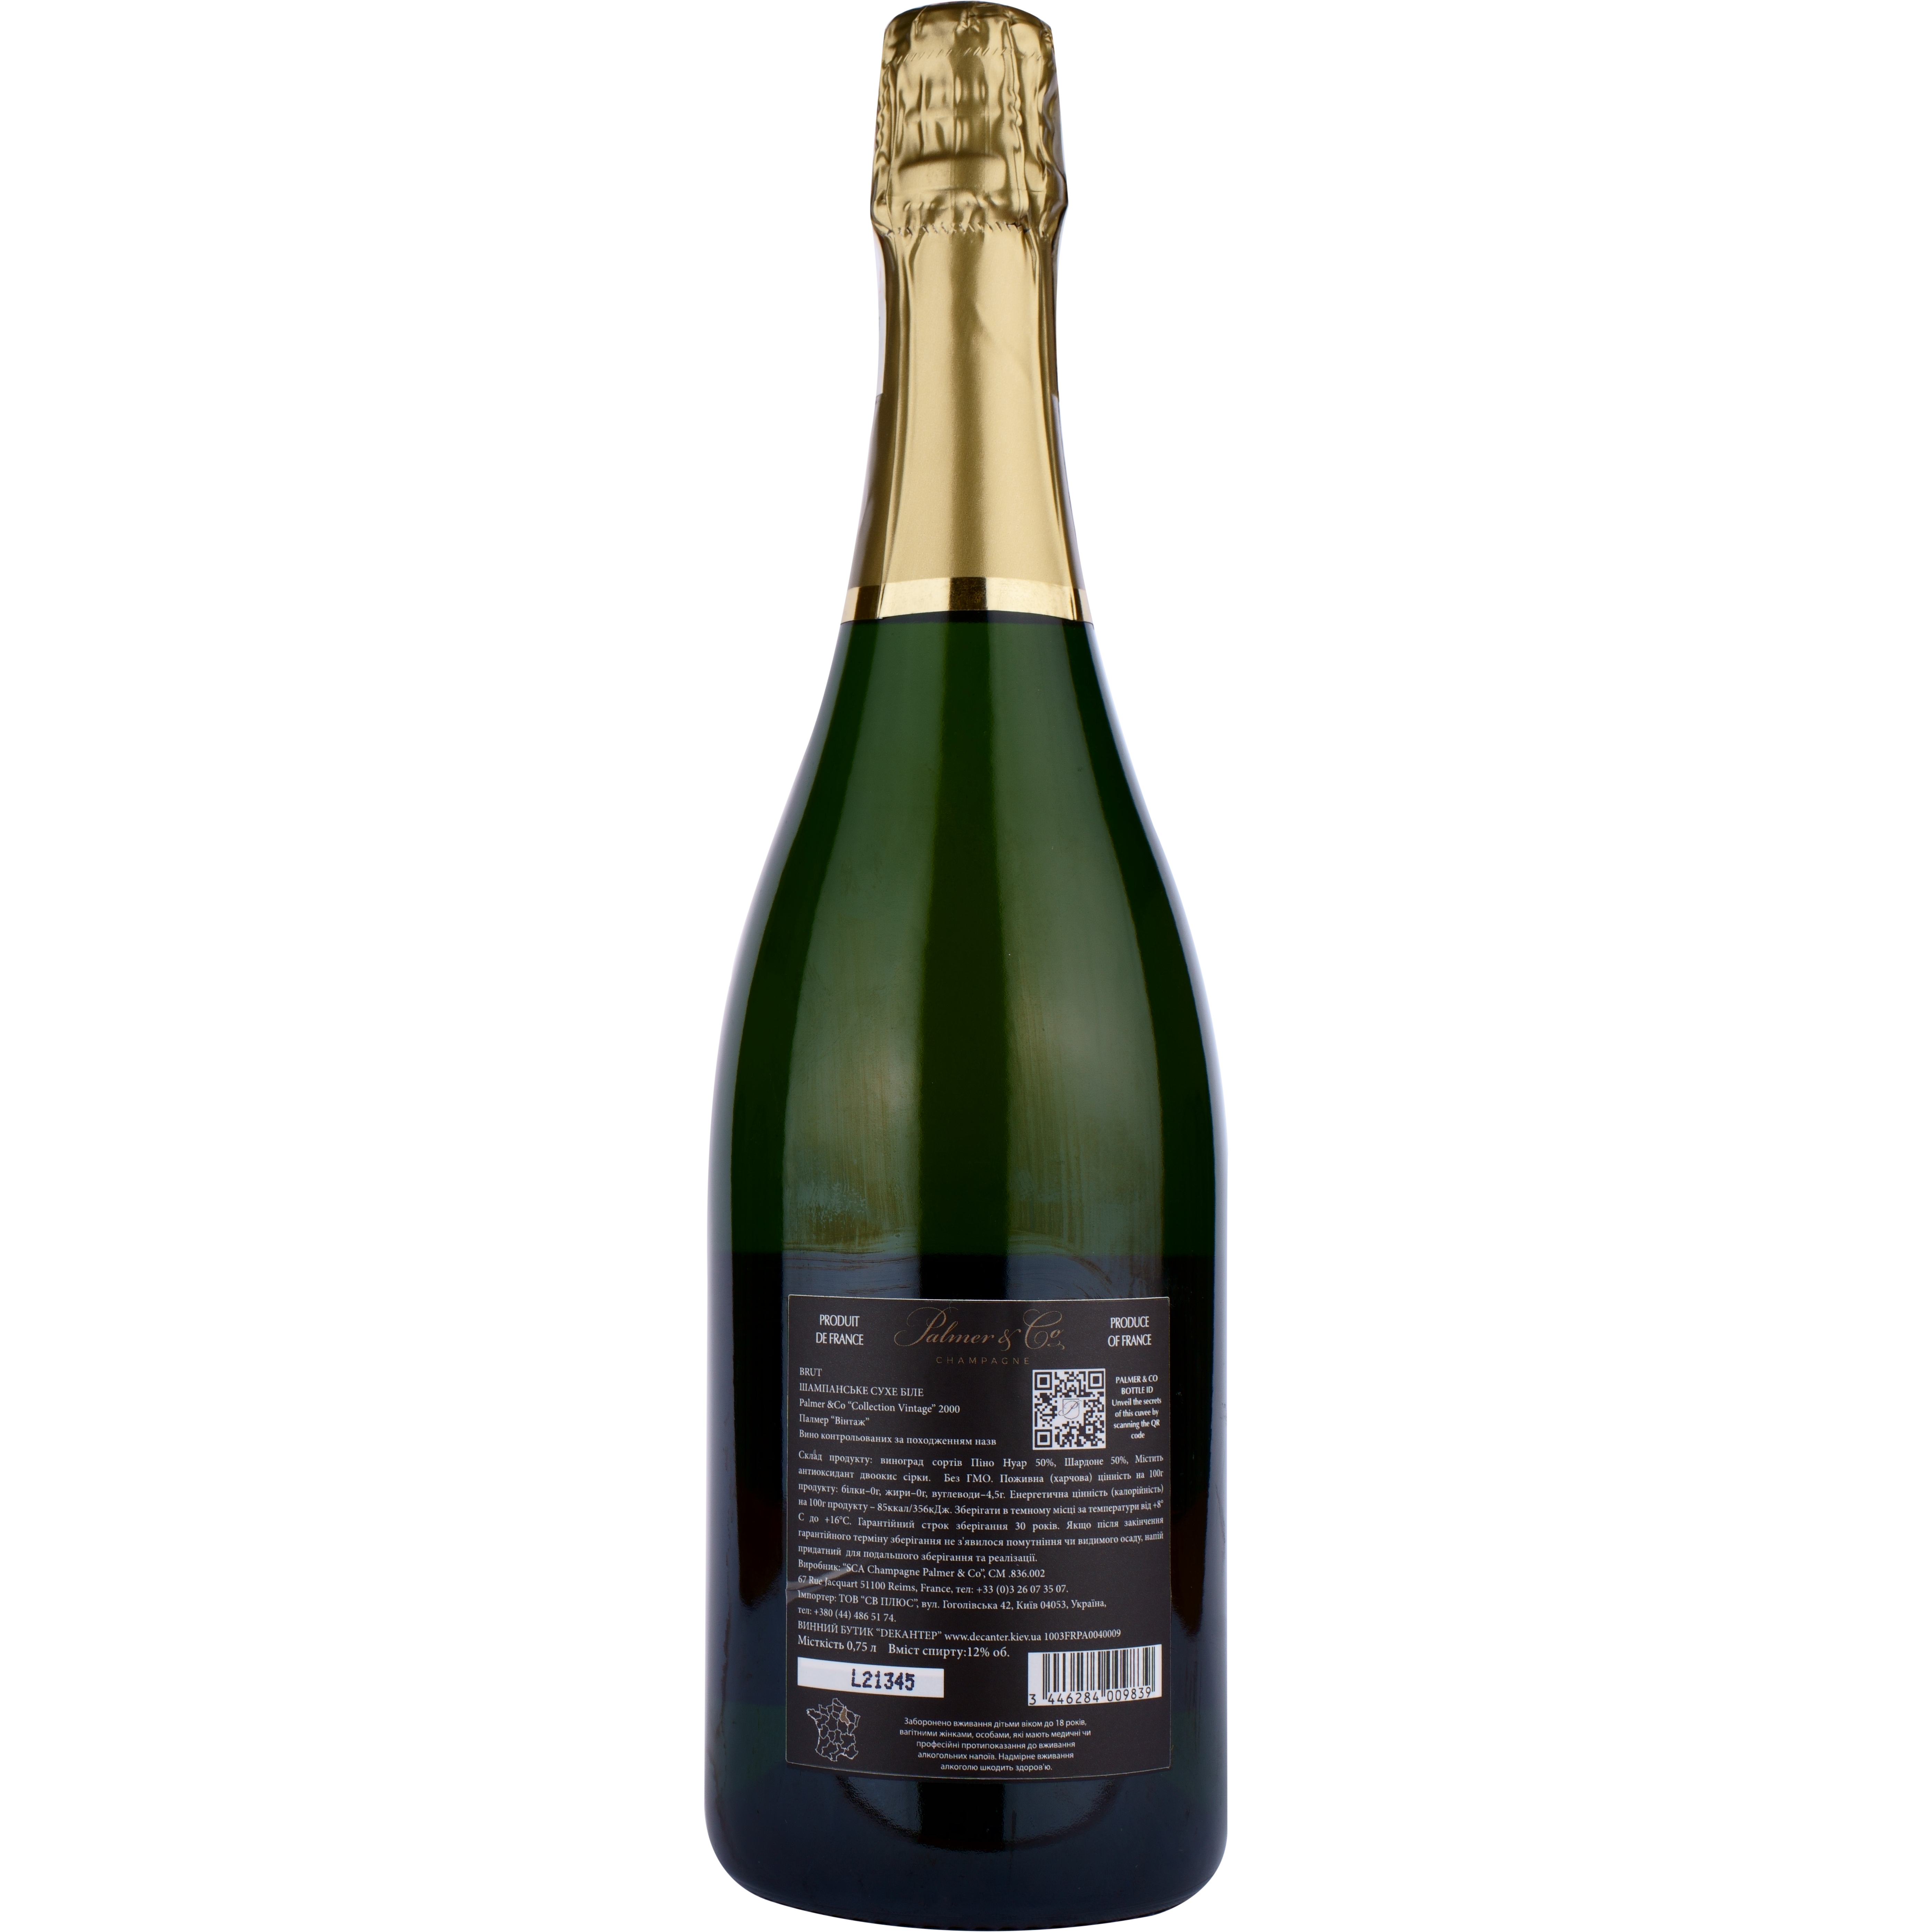 Шампанське Palmer & Co Champagne Brut Collection Vintage 2000 AOC, біле, брют, в дерев'яній коробці, 0,75 л - фото 2